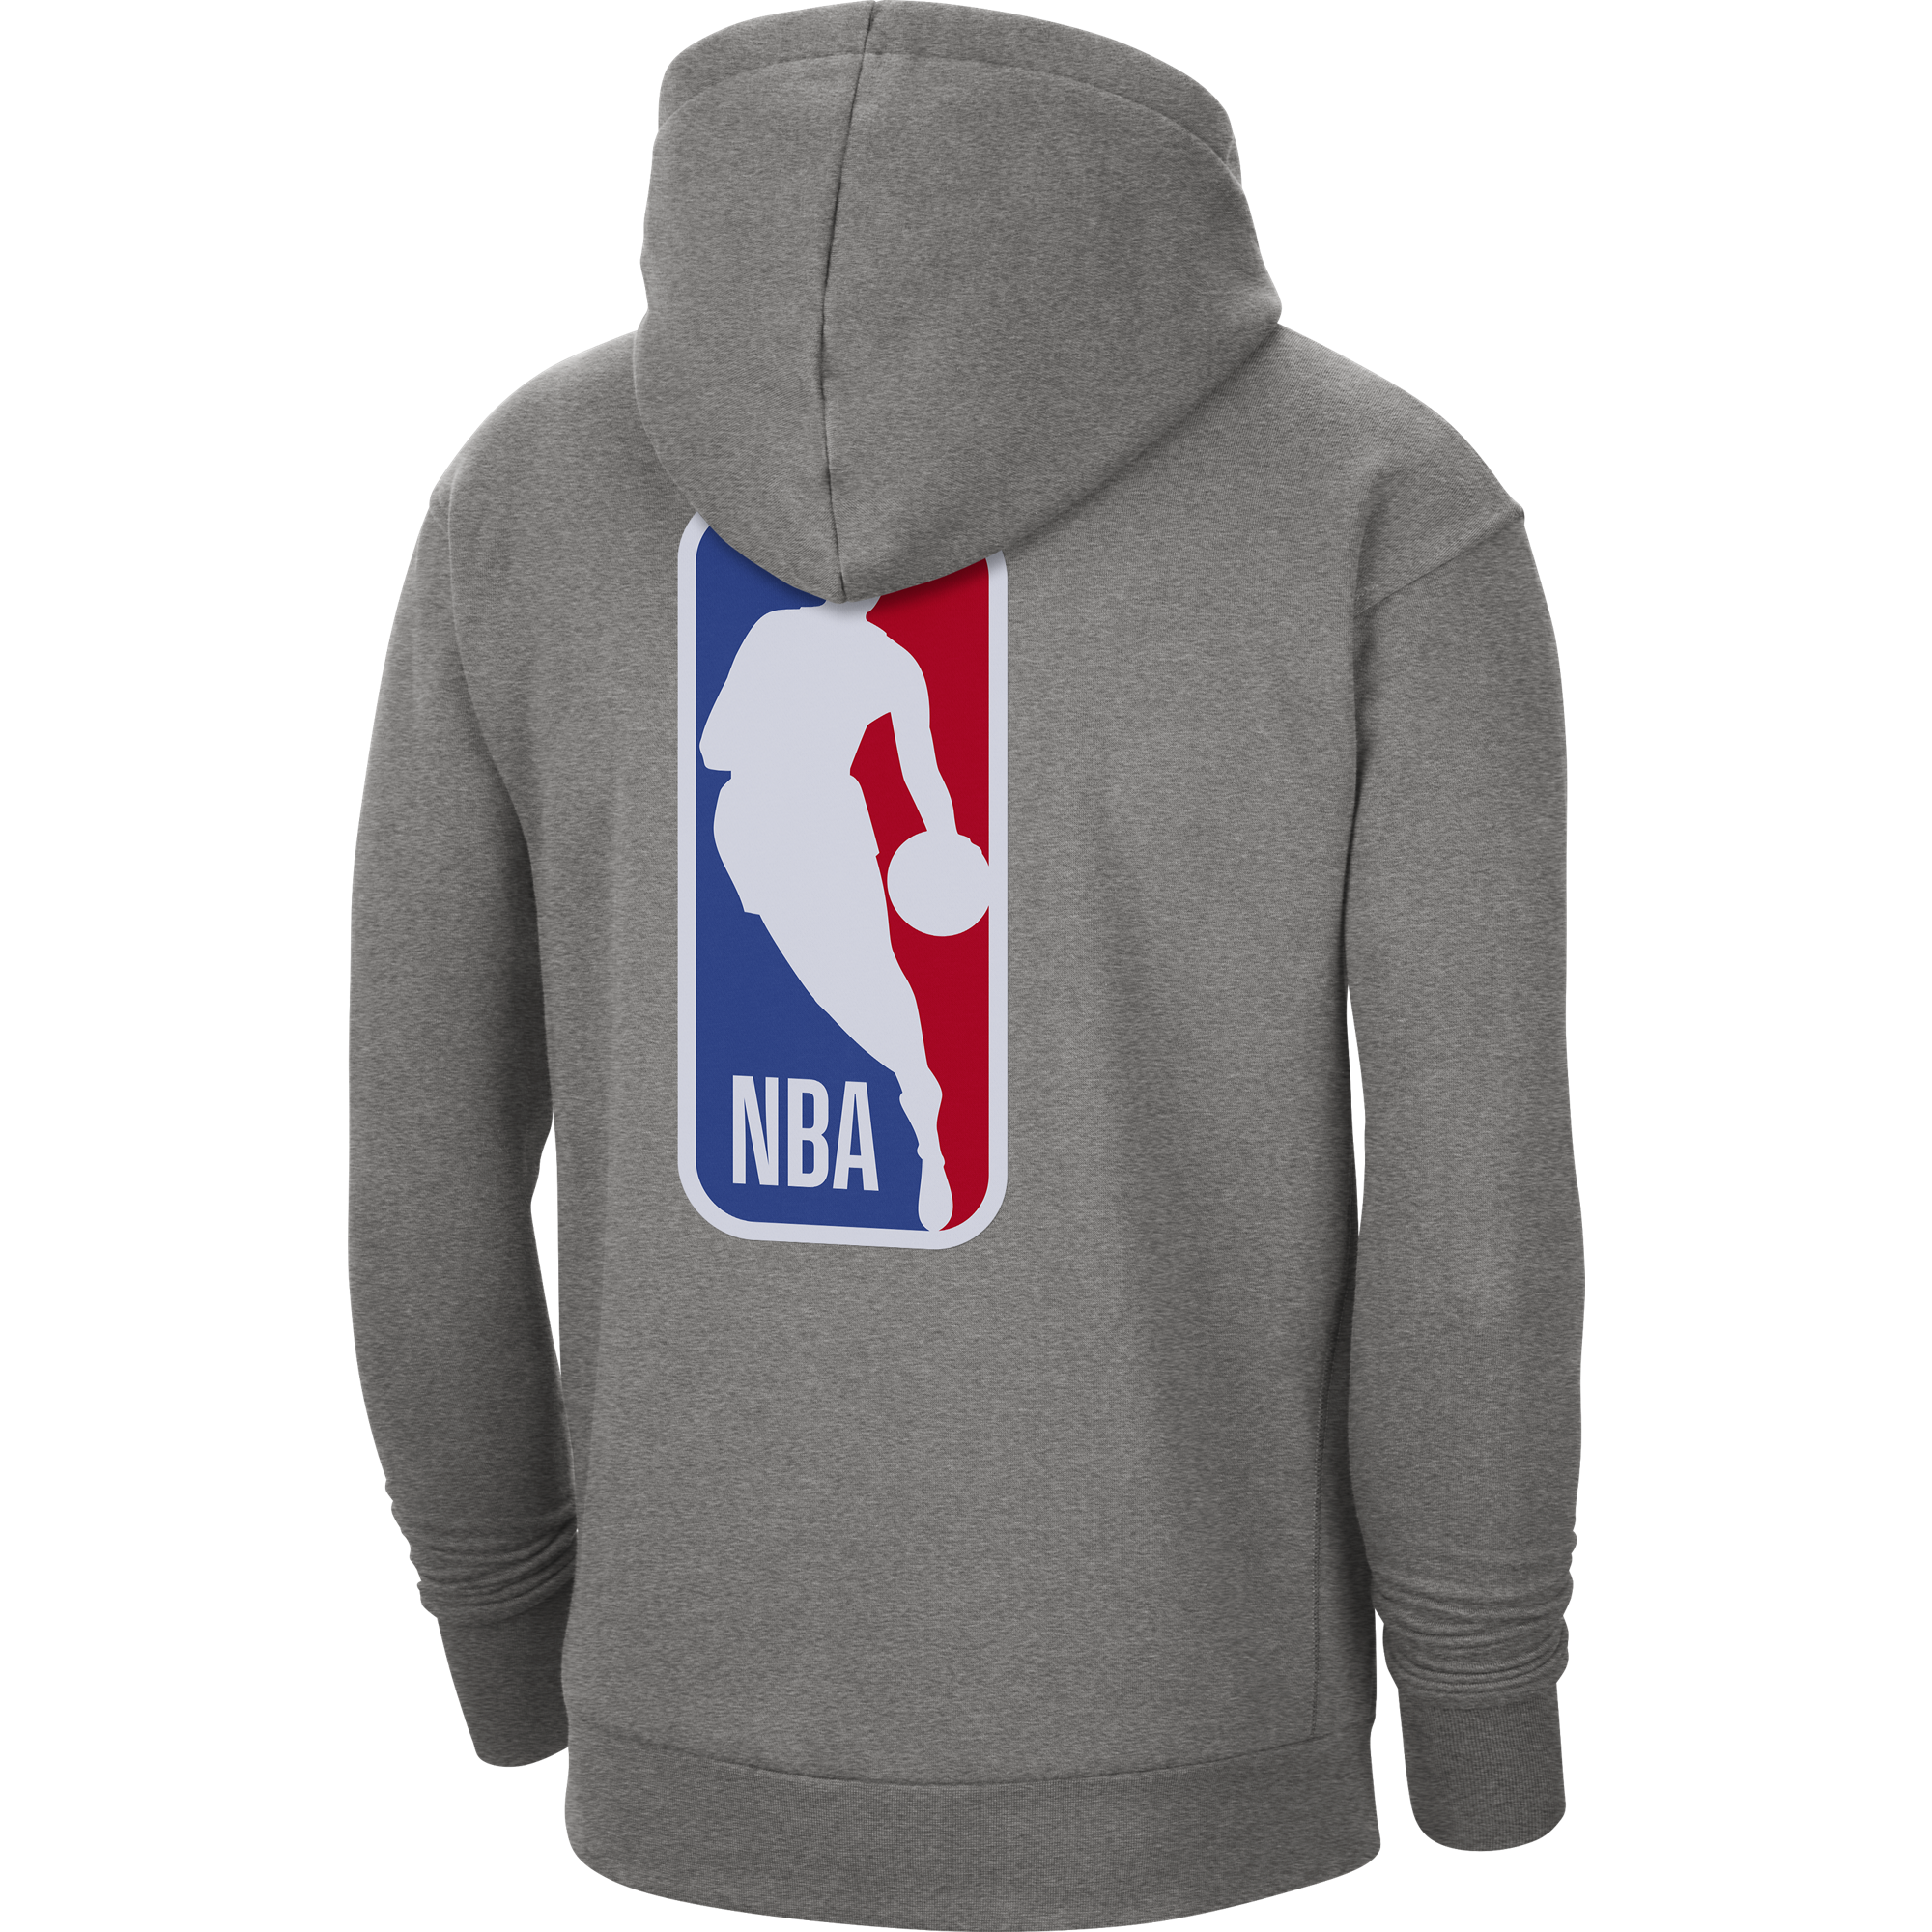 Nike All-Star Essential NBA Fleece Pullover Hoodie Grey - DK GREY  HEATHER/TEAM RED